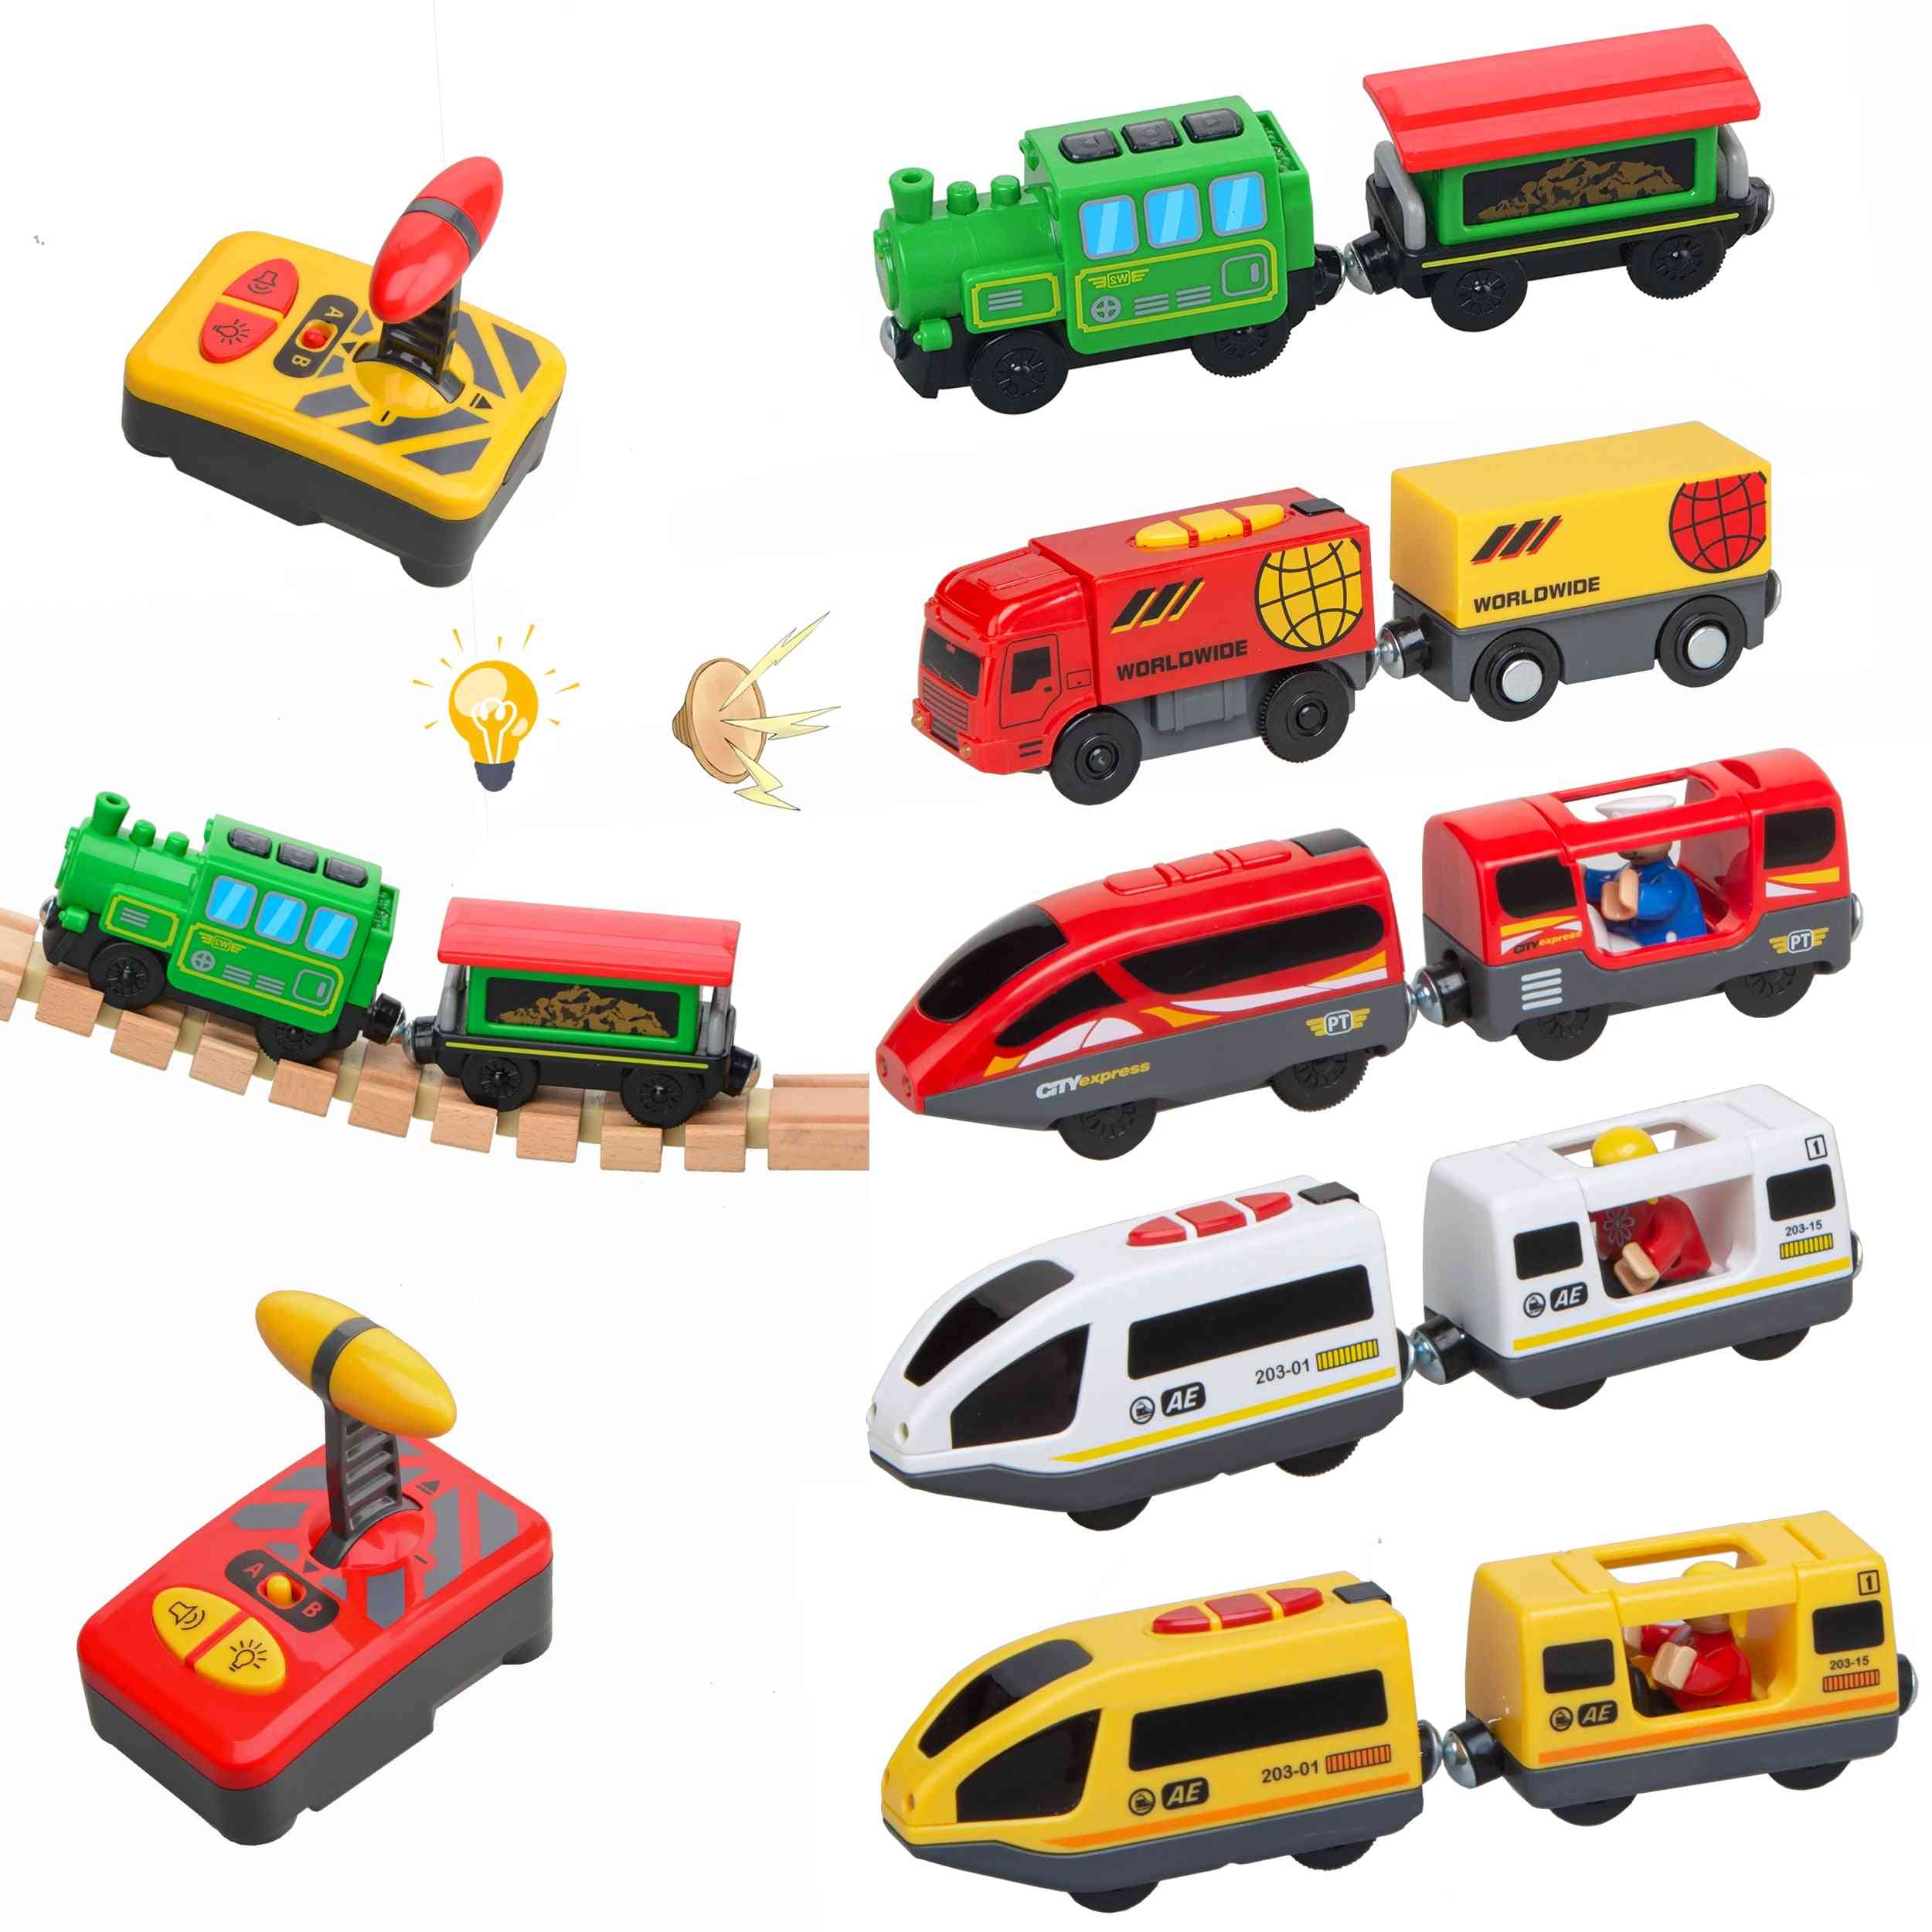 Remote Control Electric Train Toy Set